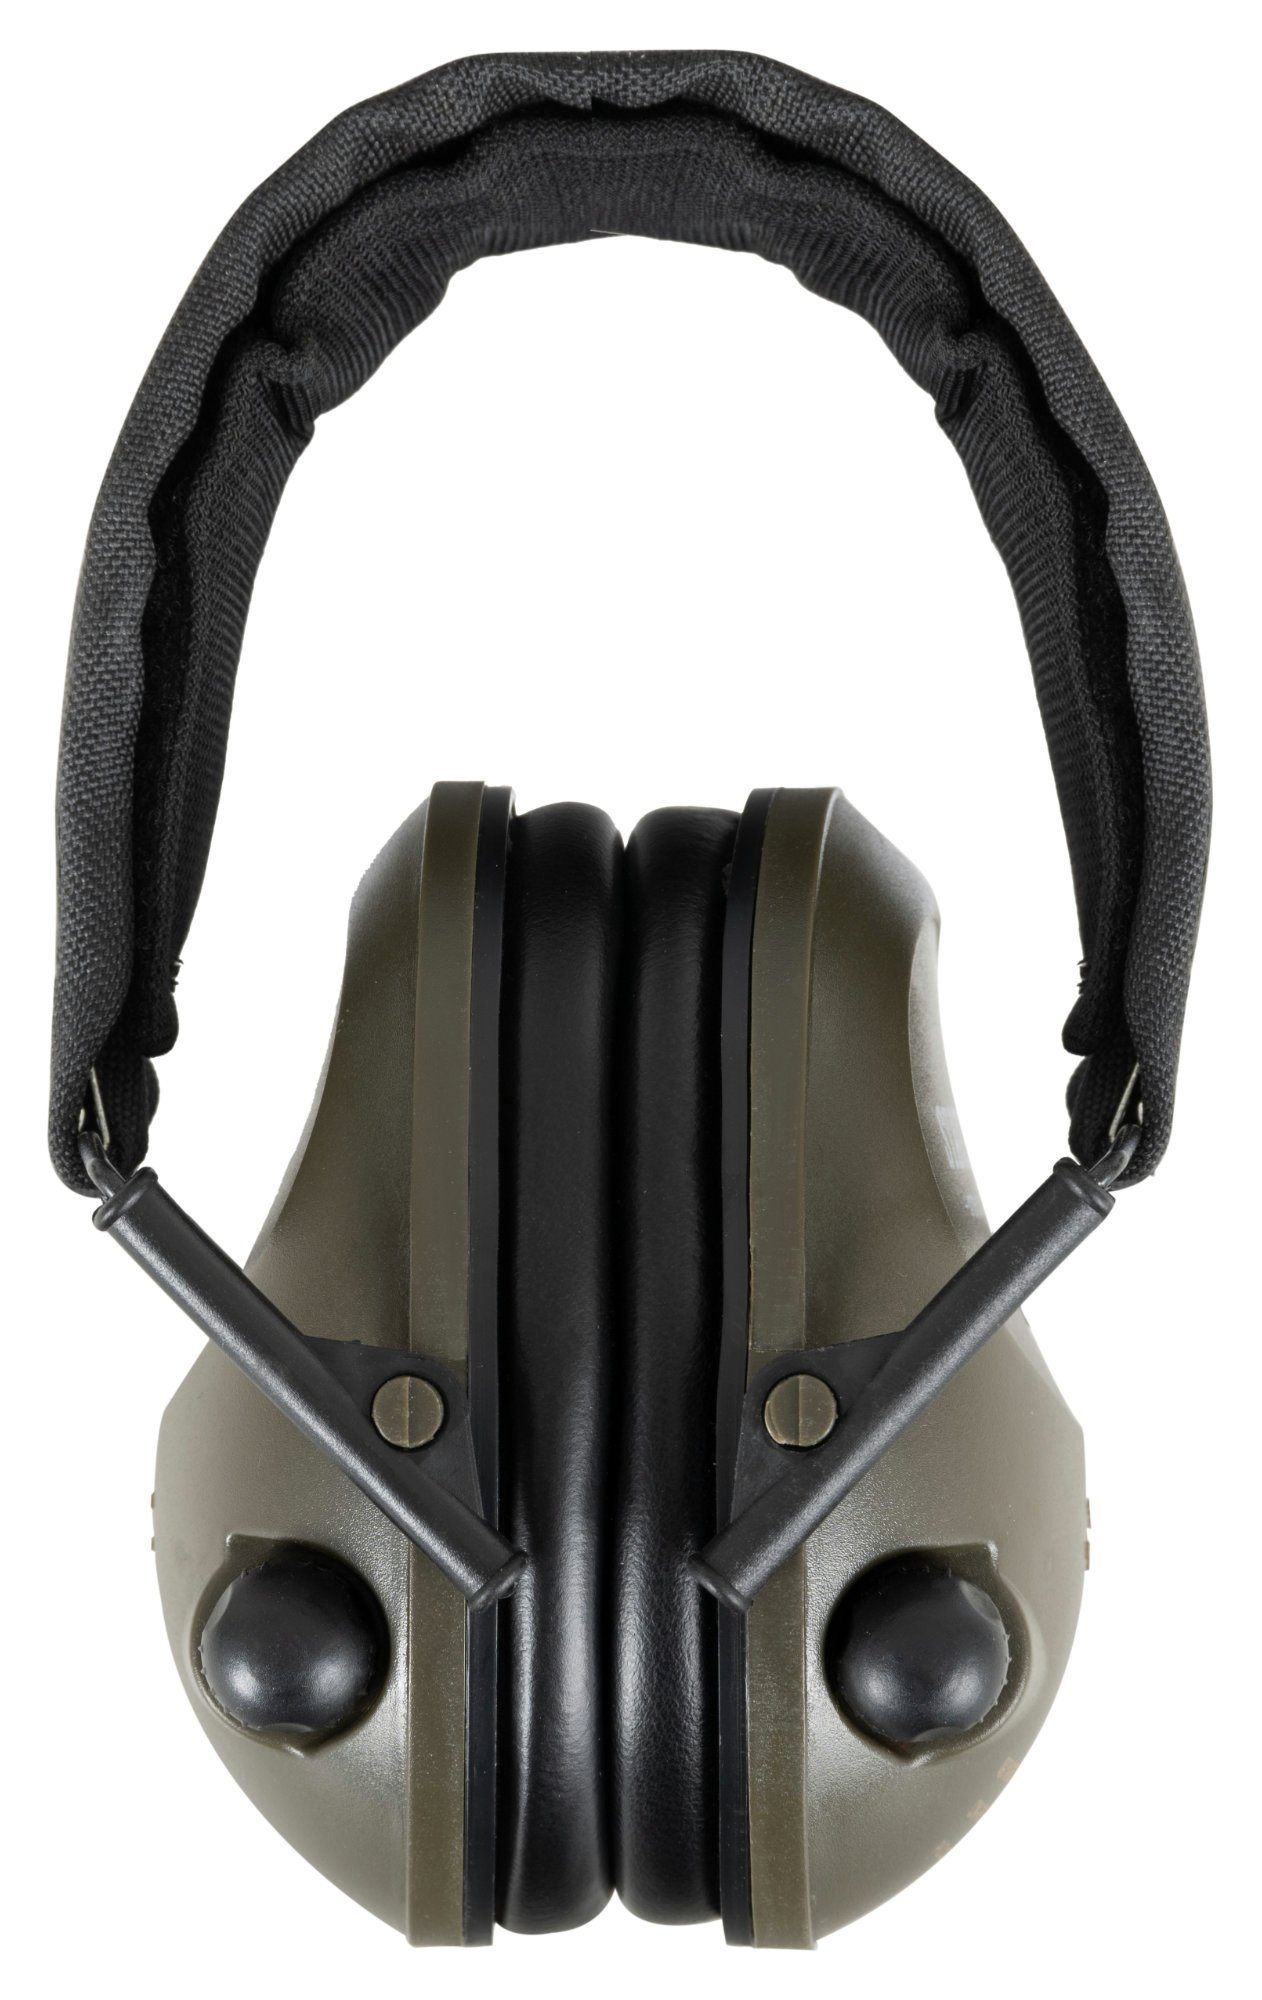 “Active-Volume-System”, Kopfhörer mit Größenverstellbar Gehörschutz Stagecaptain Bügelgehörschutz ContraNoise